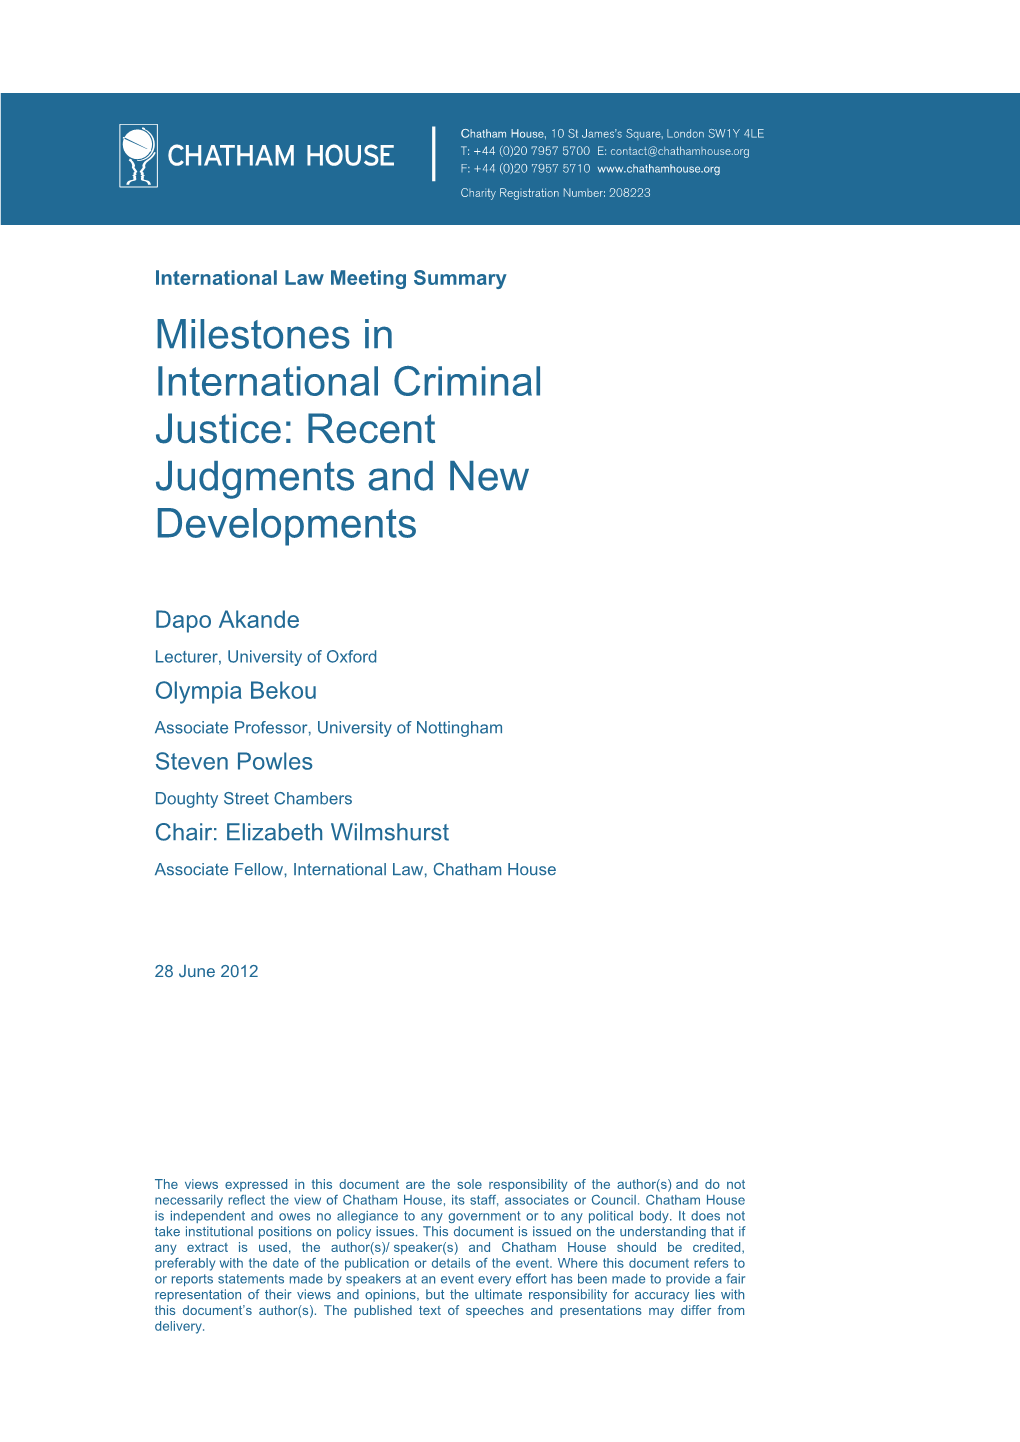 Milestones in International Criminal Justice: Recent Judgments and New Developments